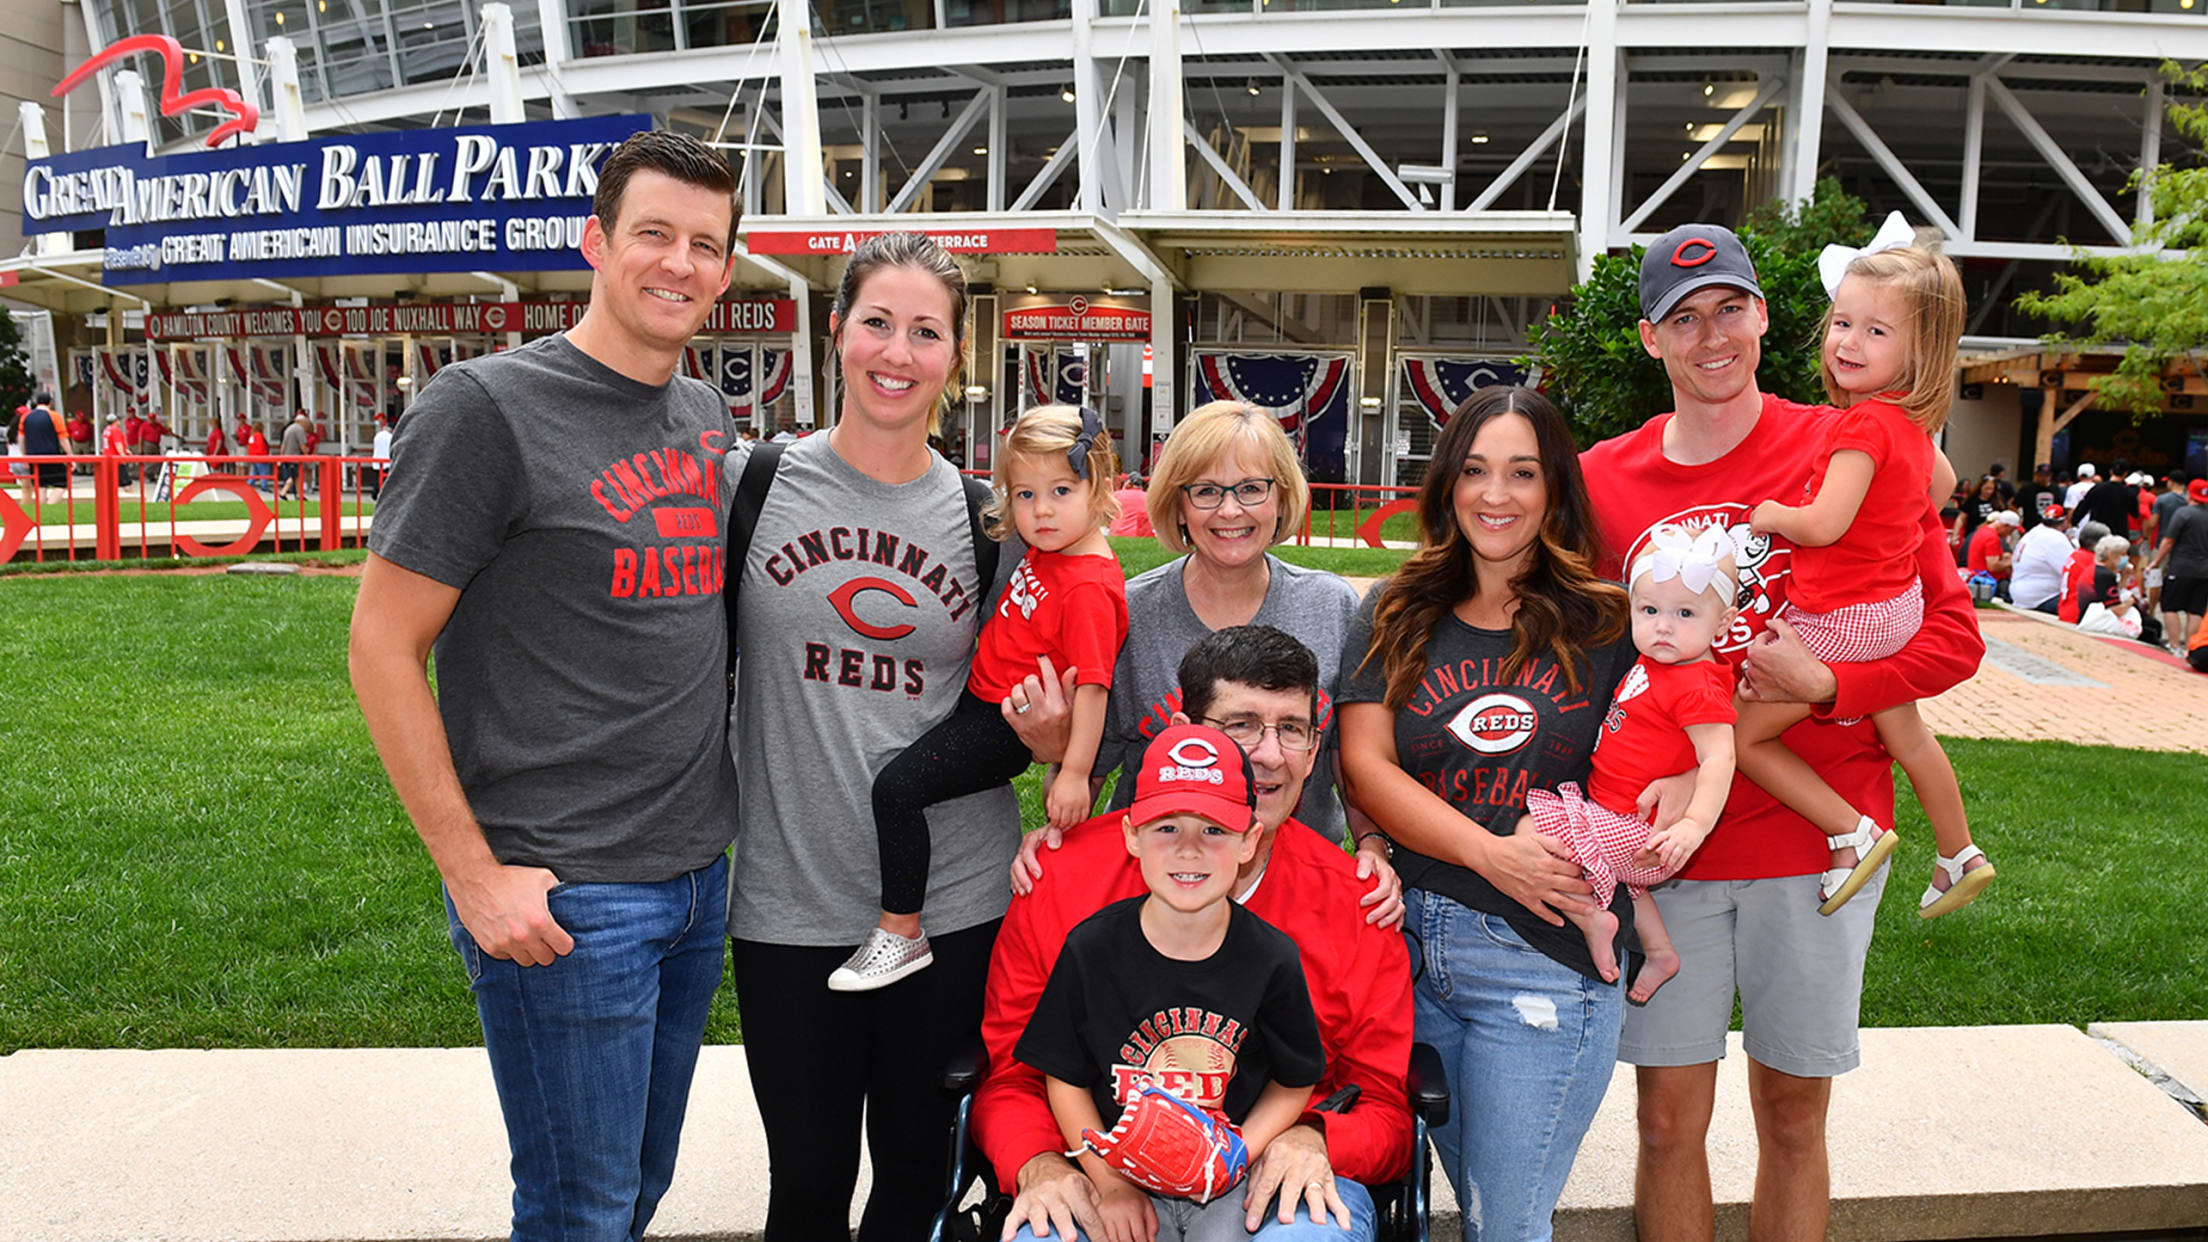 7 Things Families Love at a Cincinnati Reds Baseball Game